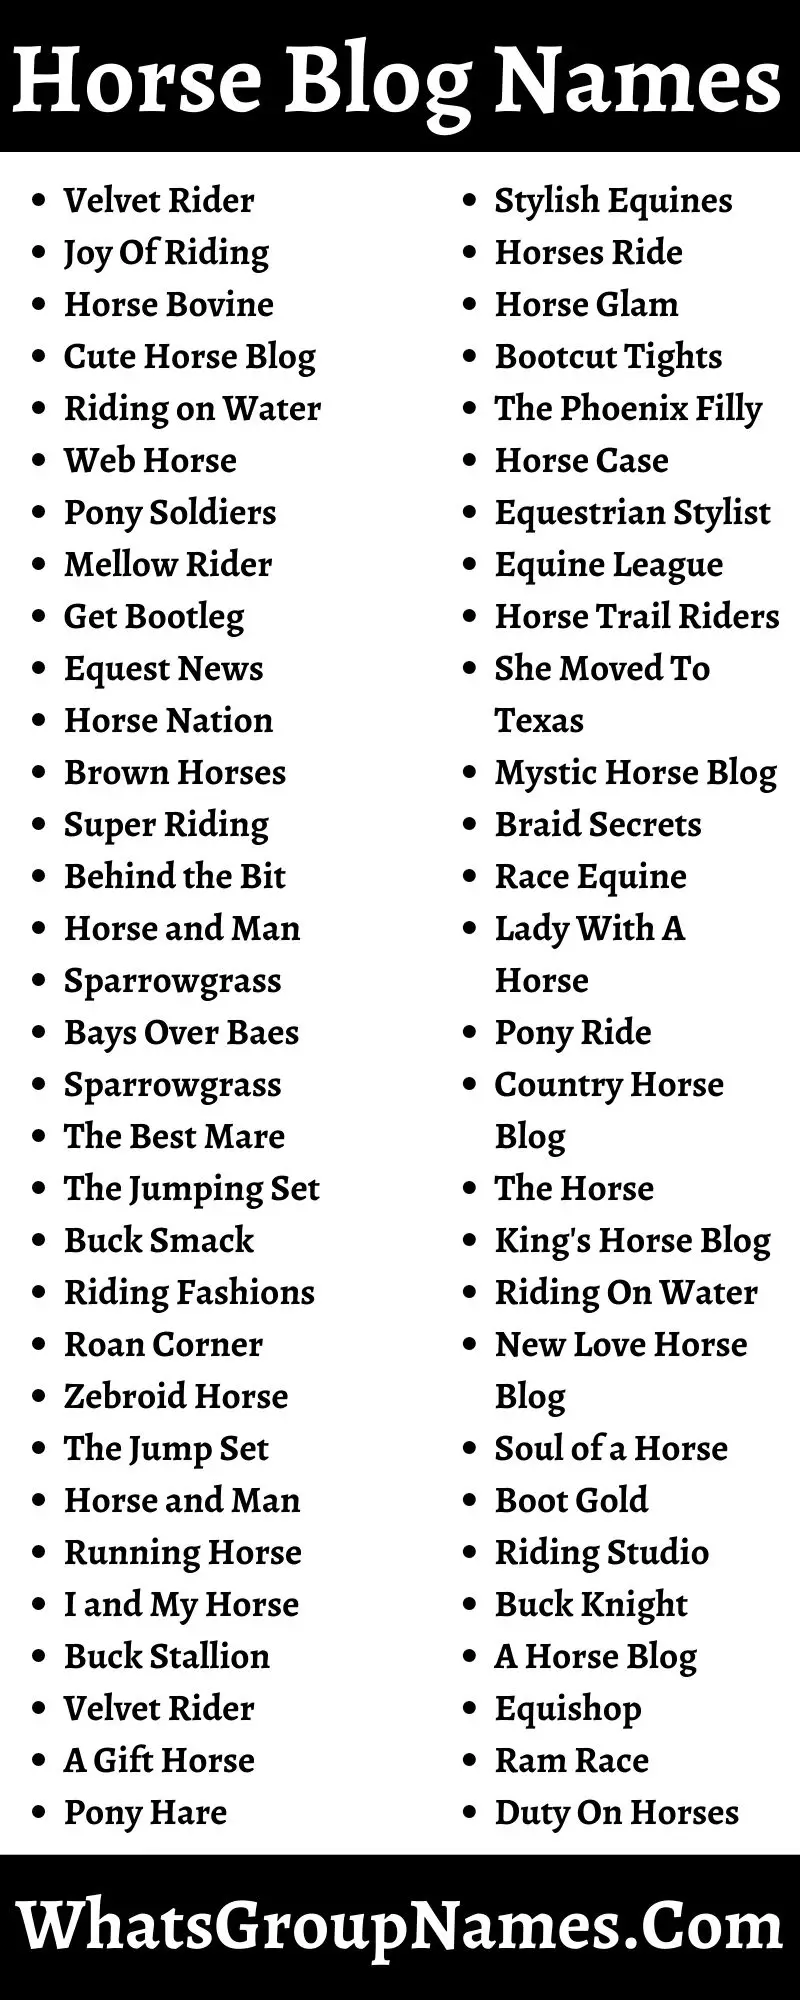 Horse Blog Names